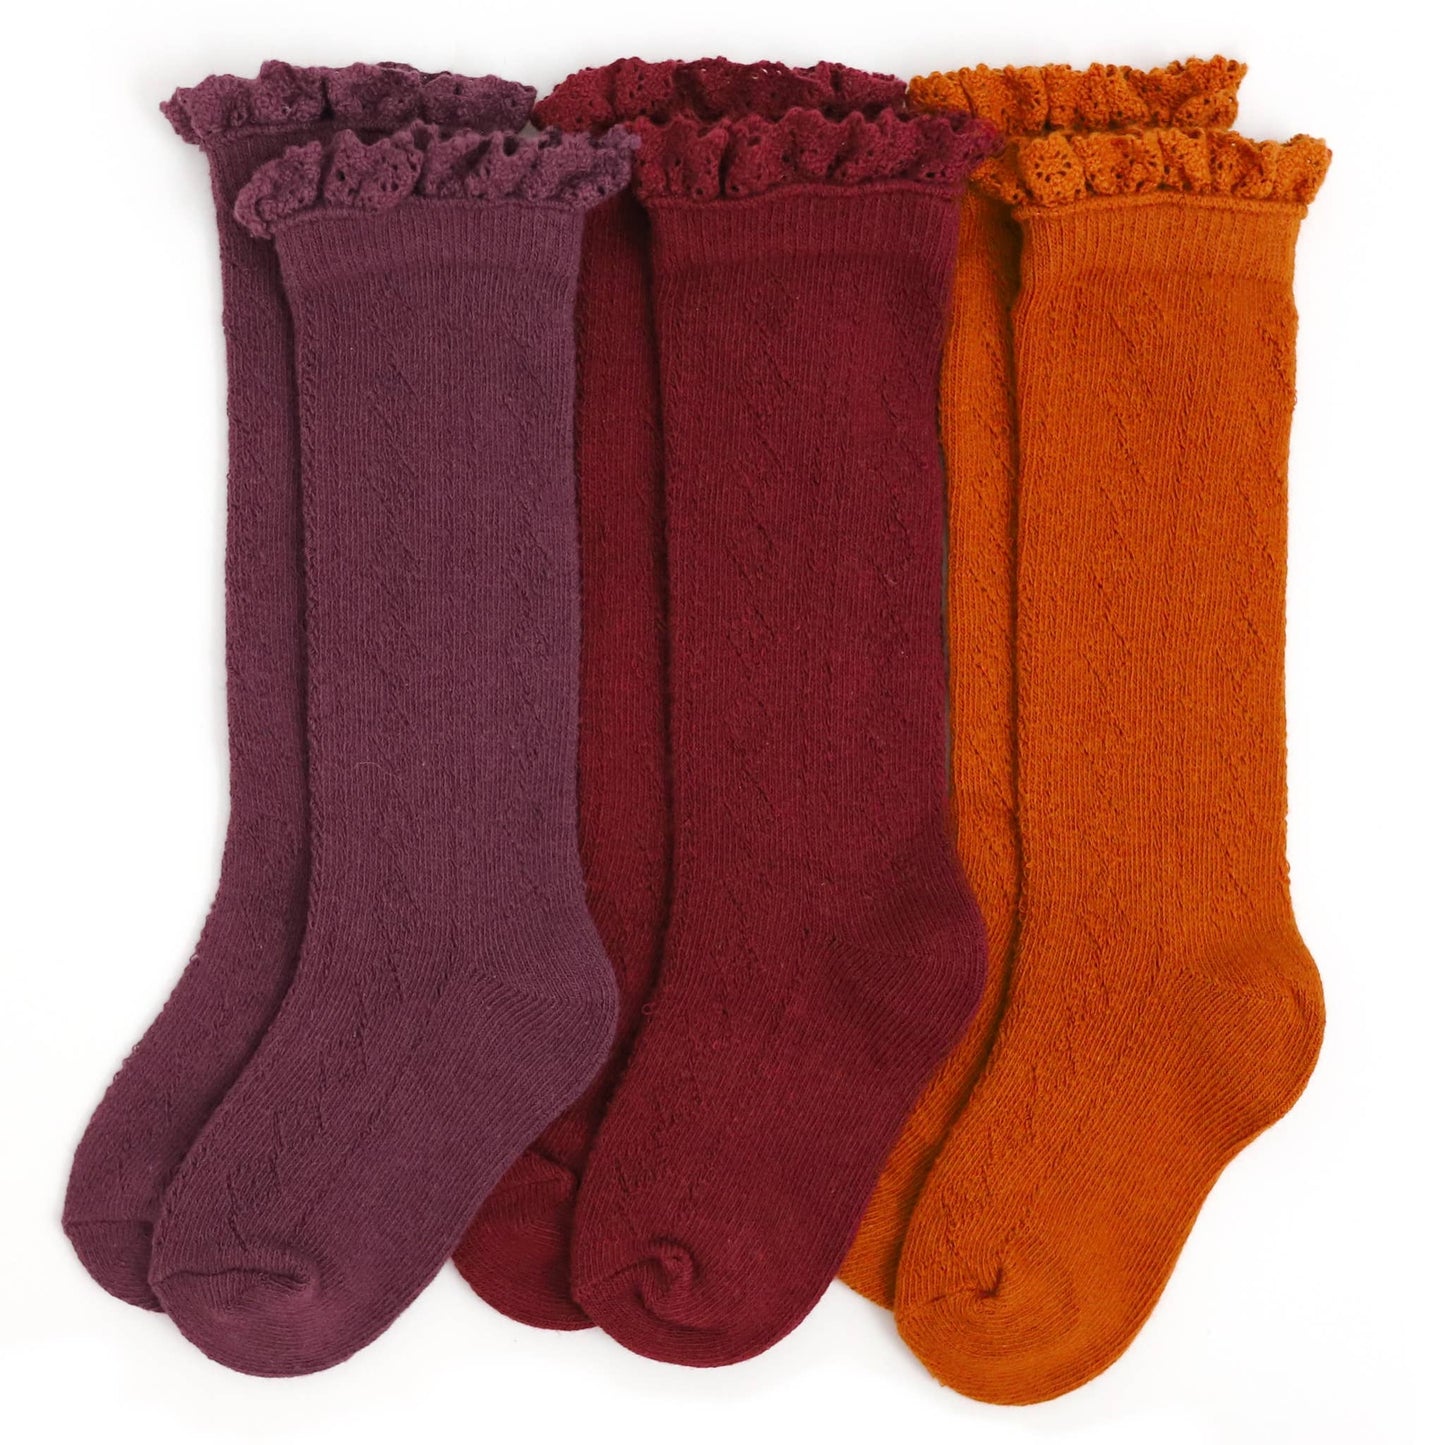 Autumn Fancy Knee High Sock 3-Pack: 6-18 MONTHS